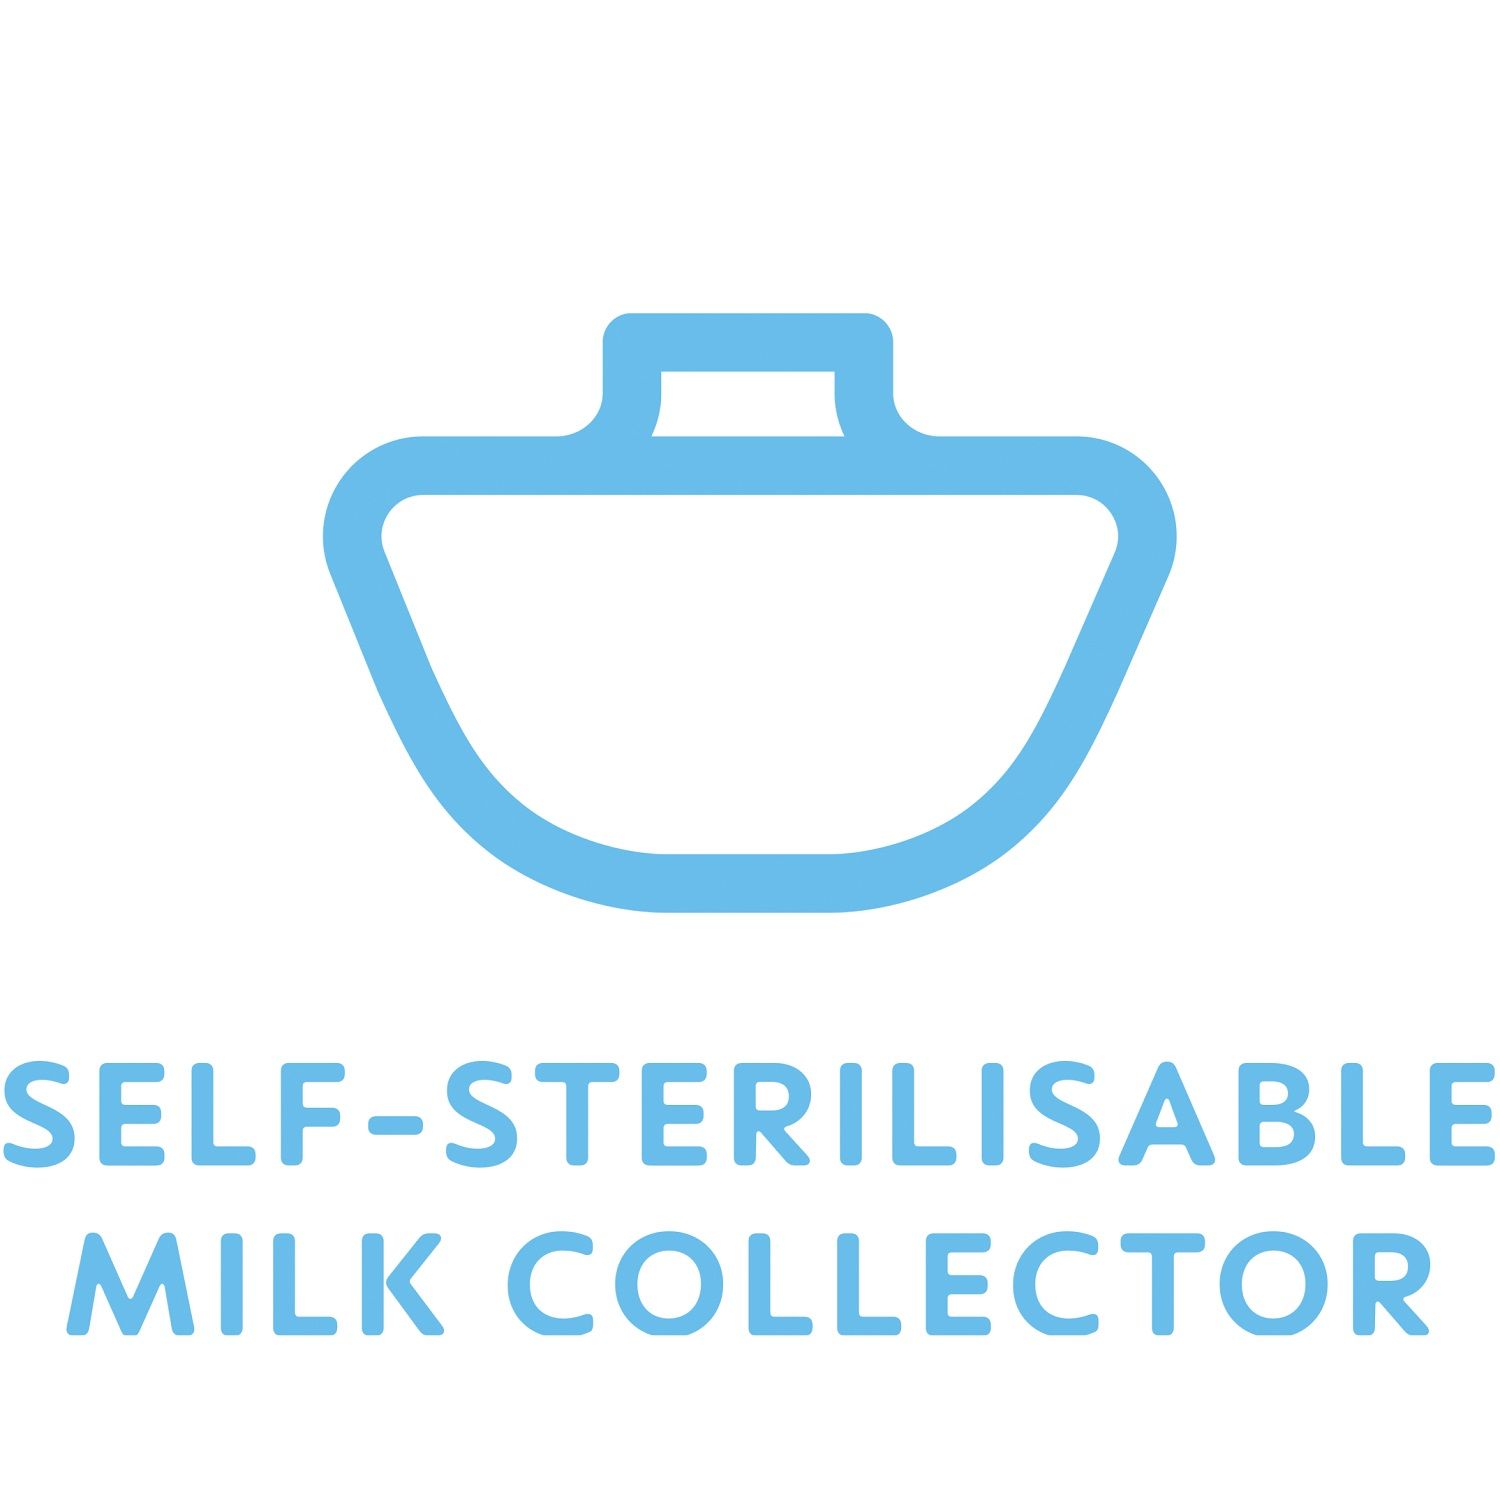 Self-sterilisable milk collector.